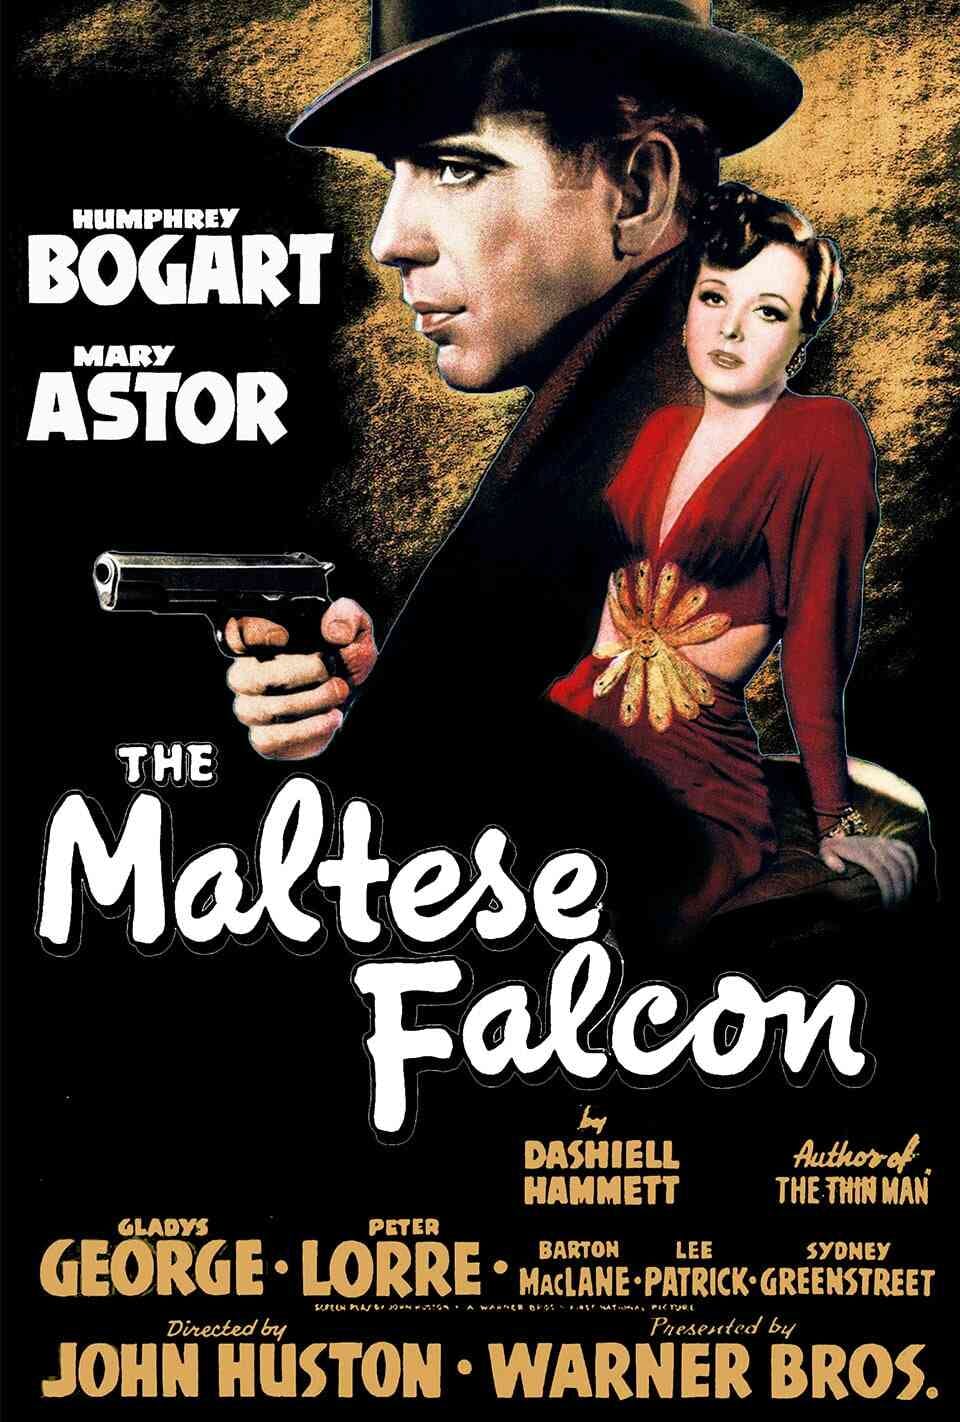 Read The Maltese Falcon screenplay (poster)